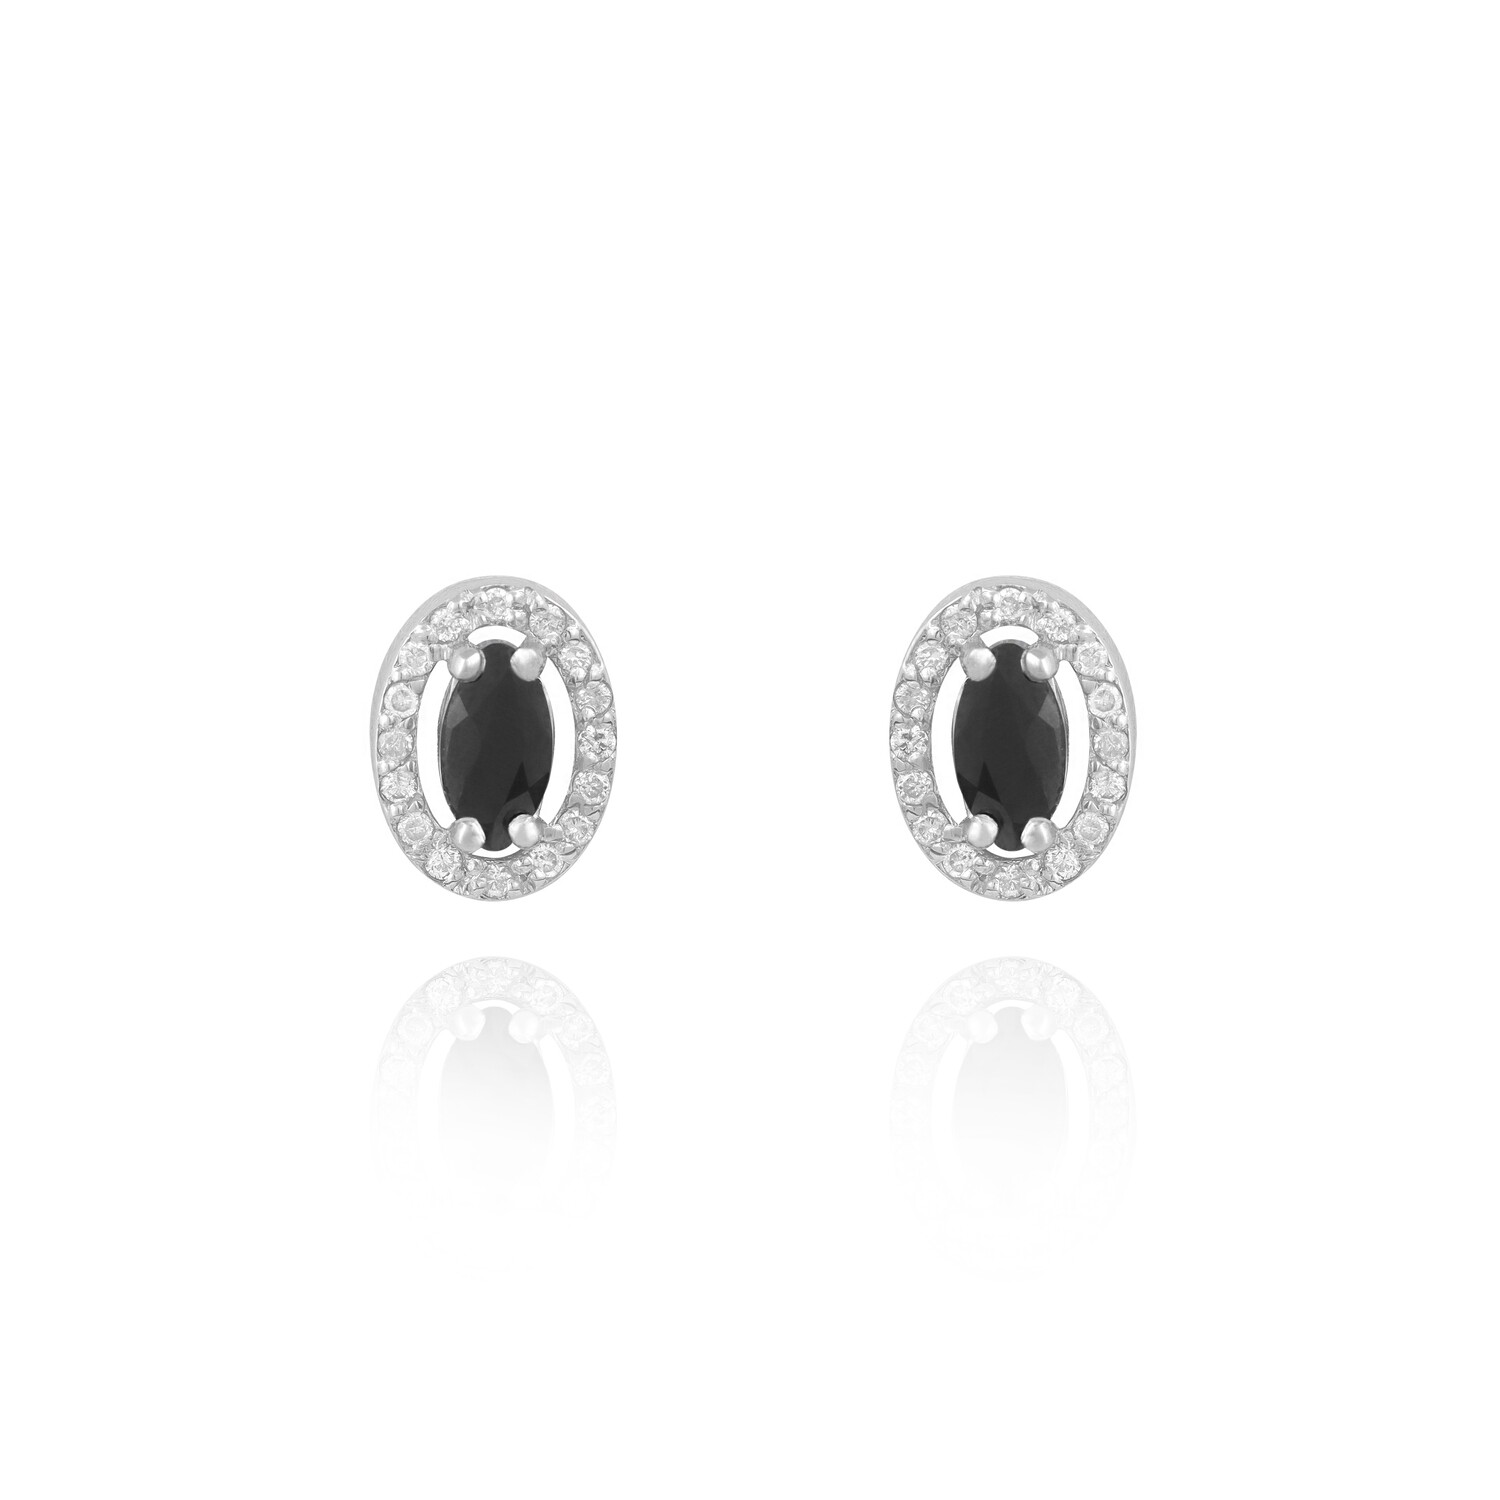 Eternal Diamond Earrings with Sapphire